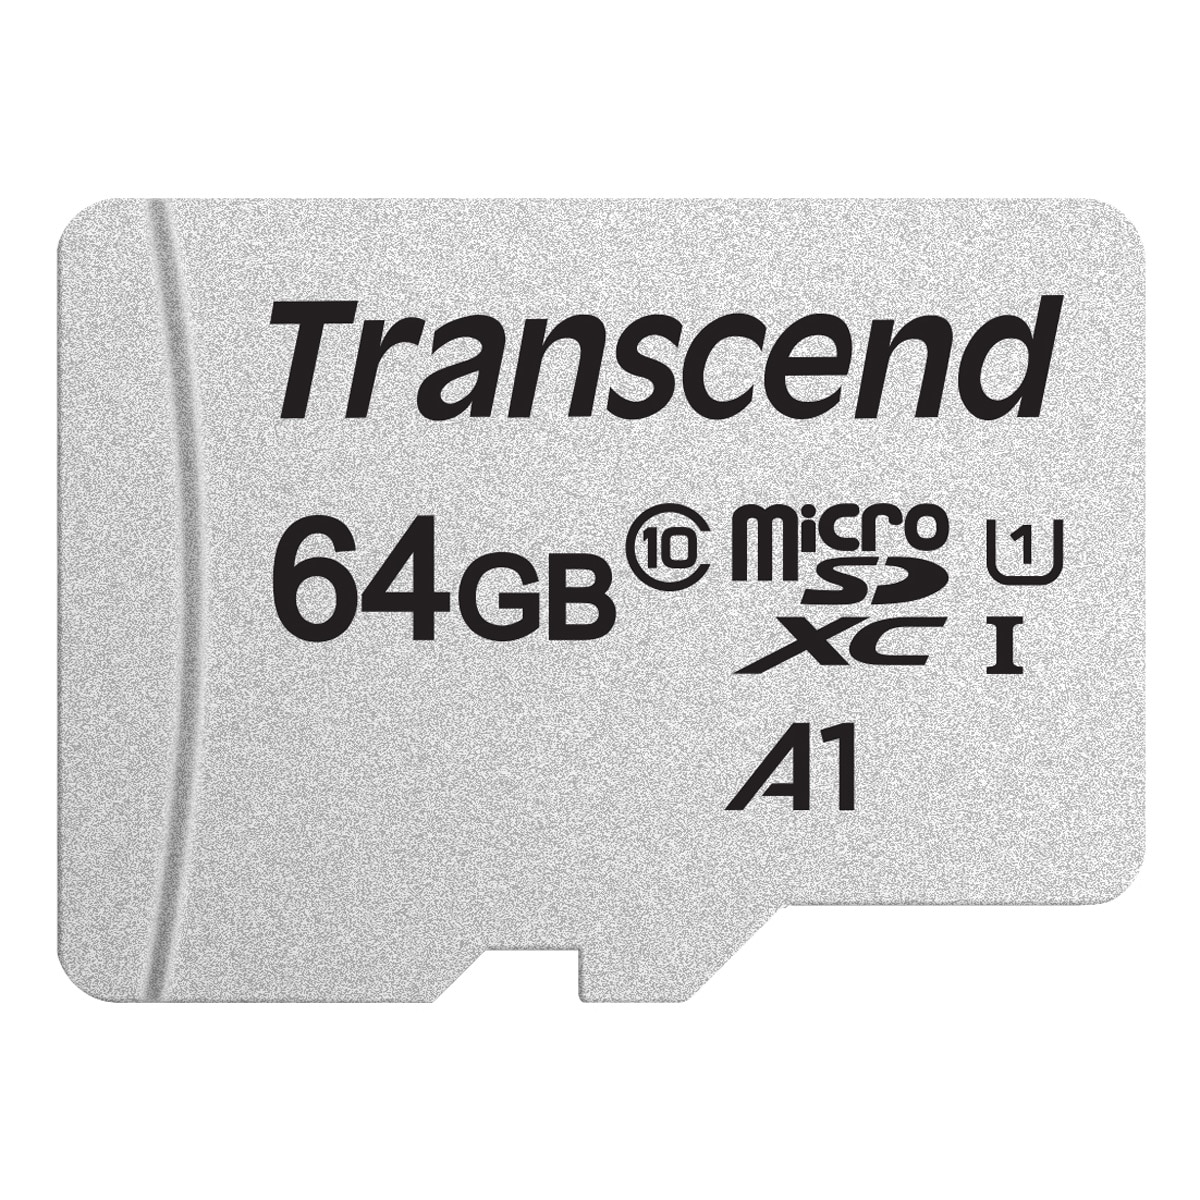 microSDXC 64GB U1 (R95/W25) - Memory Card